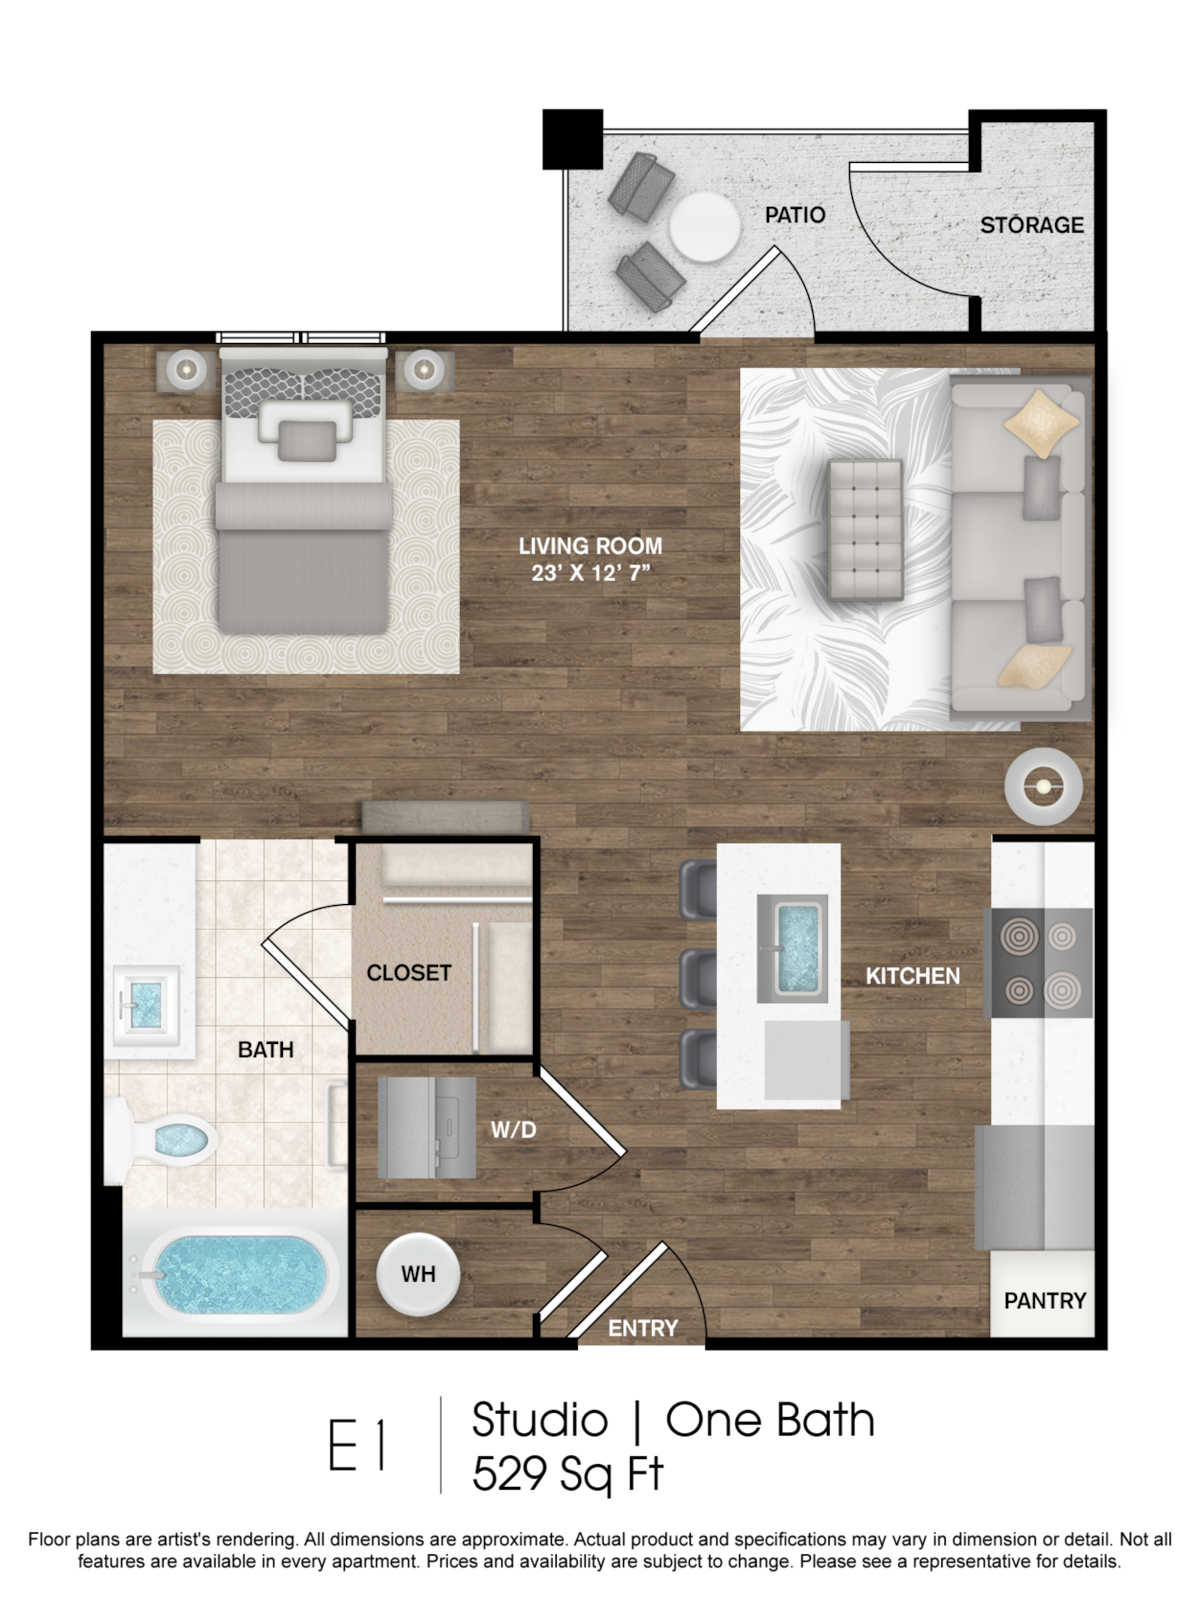 Floorplan diagram for E1, showing Studio